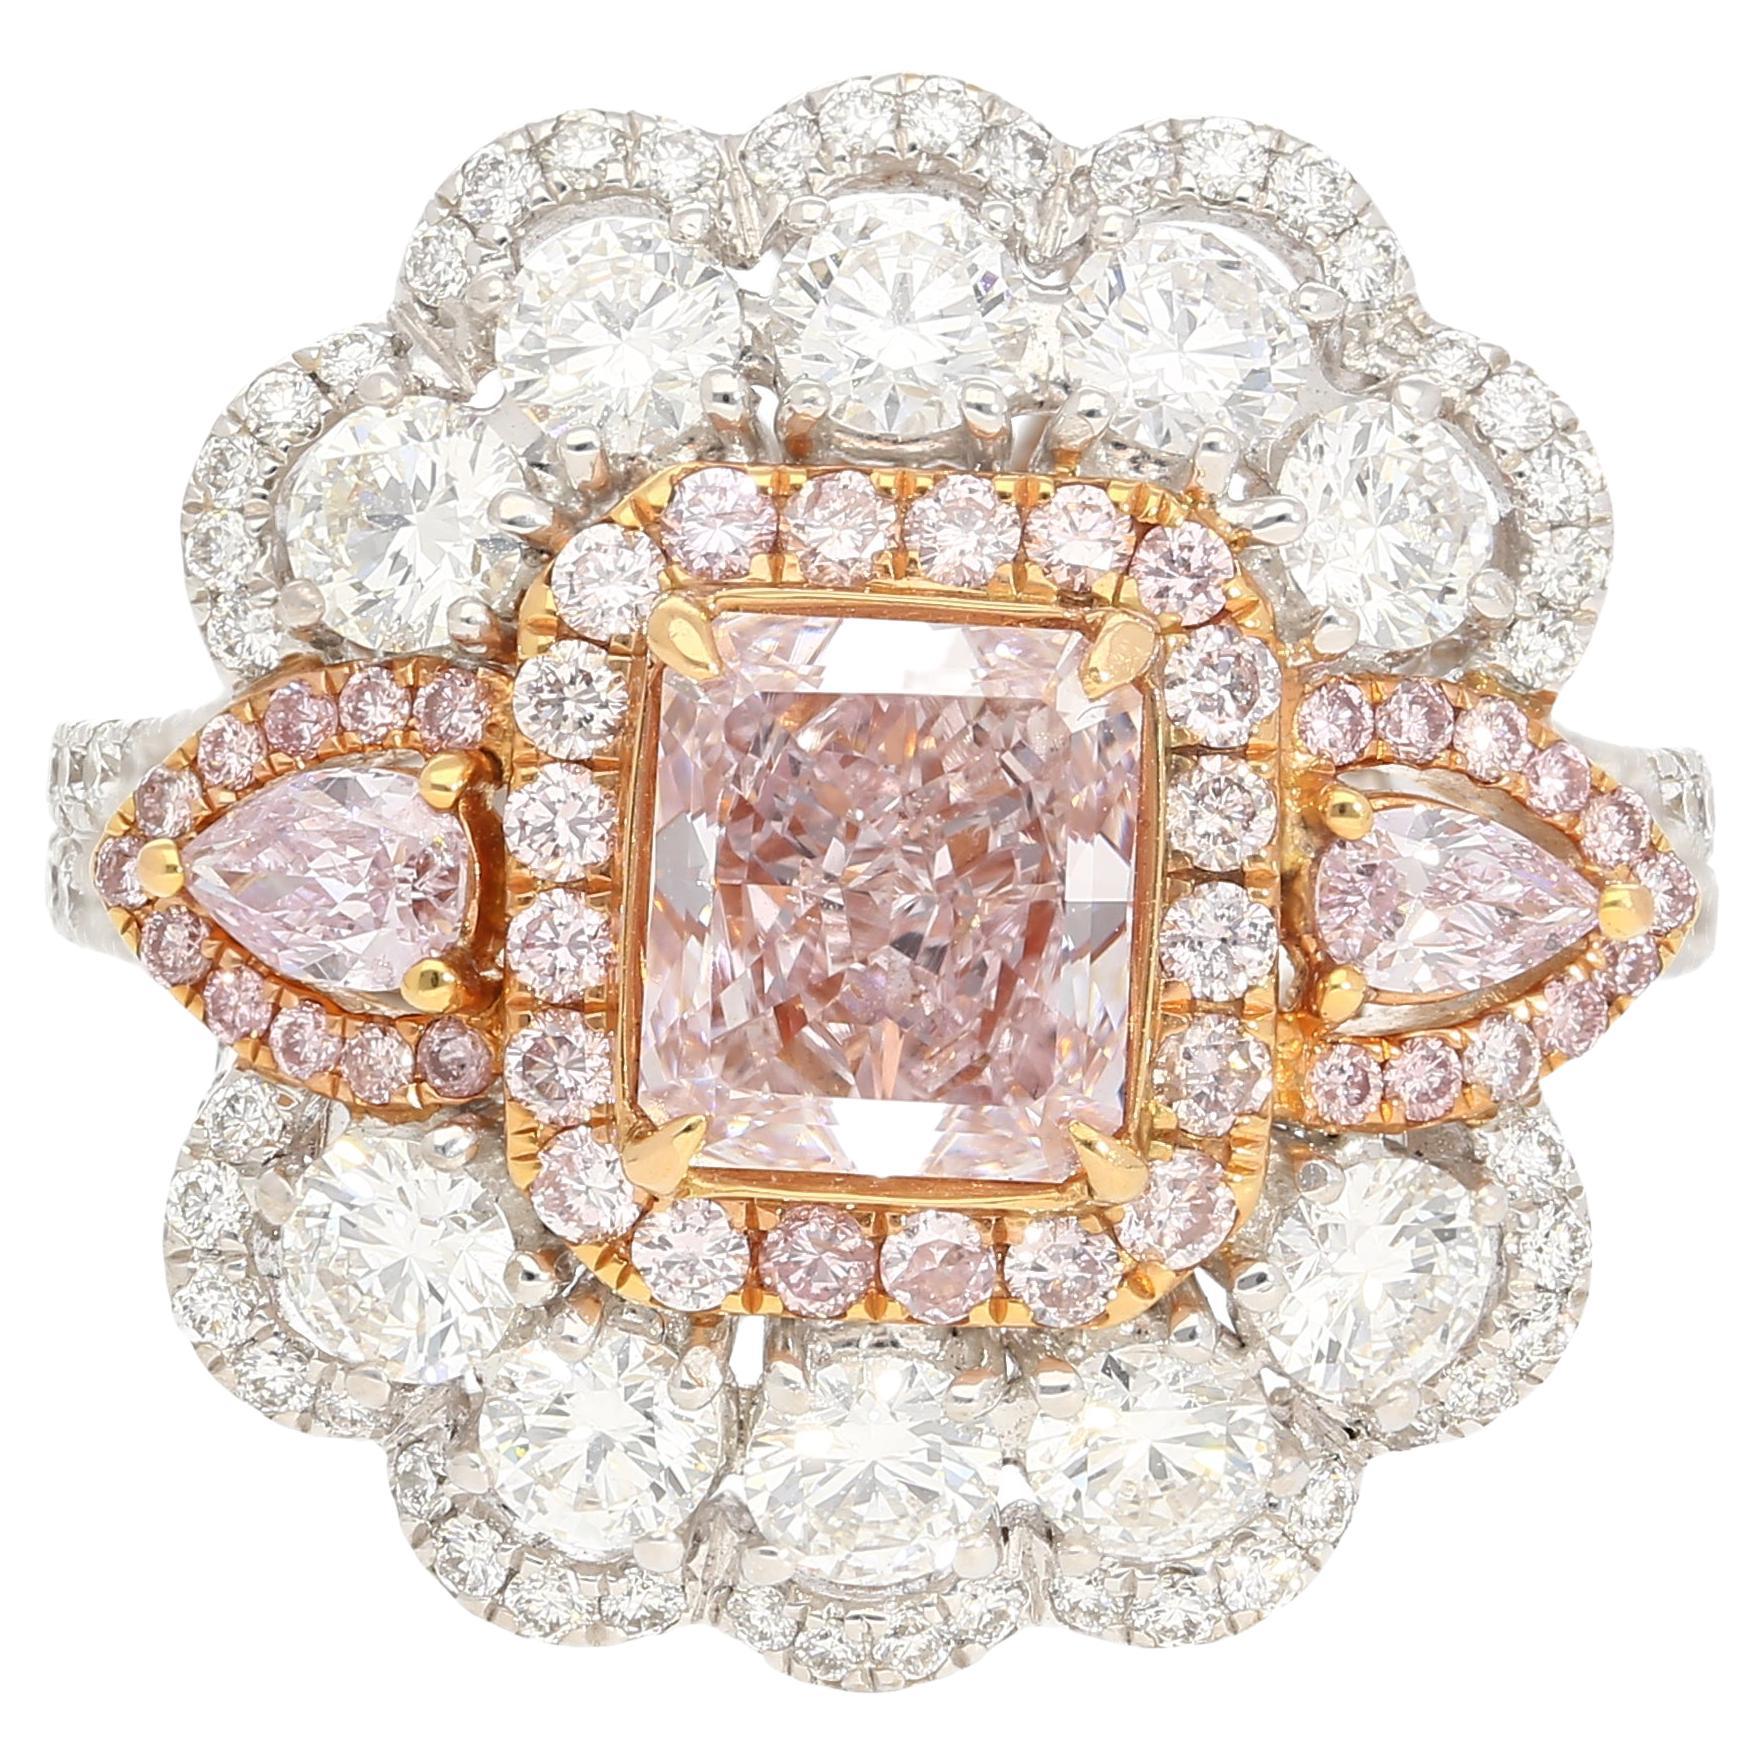 GIA Certified Fancy Light Purplish Pink Radiant Cut Diamond Ring in 18k Gold